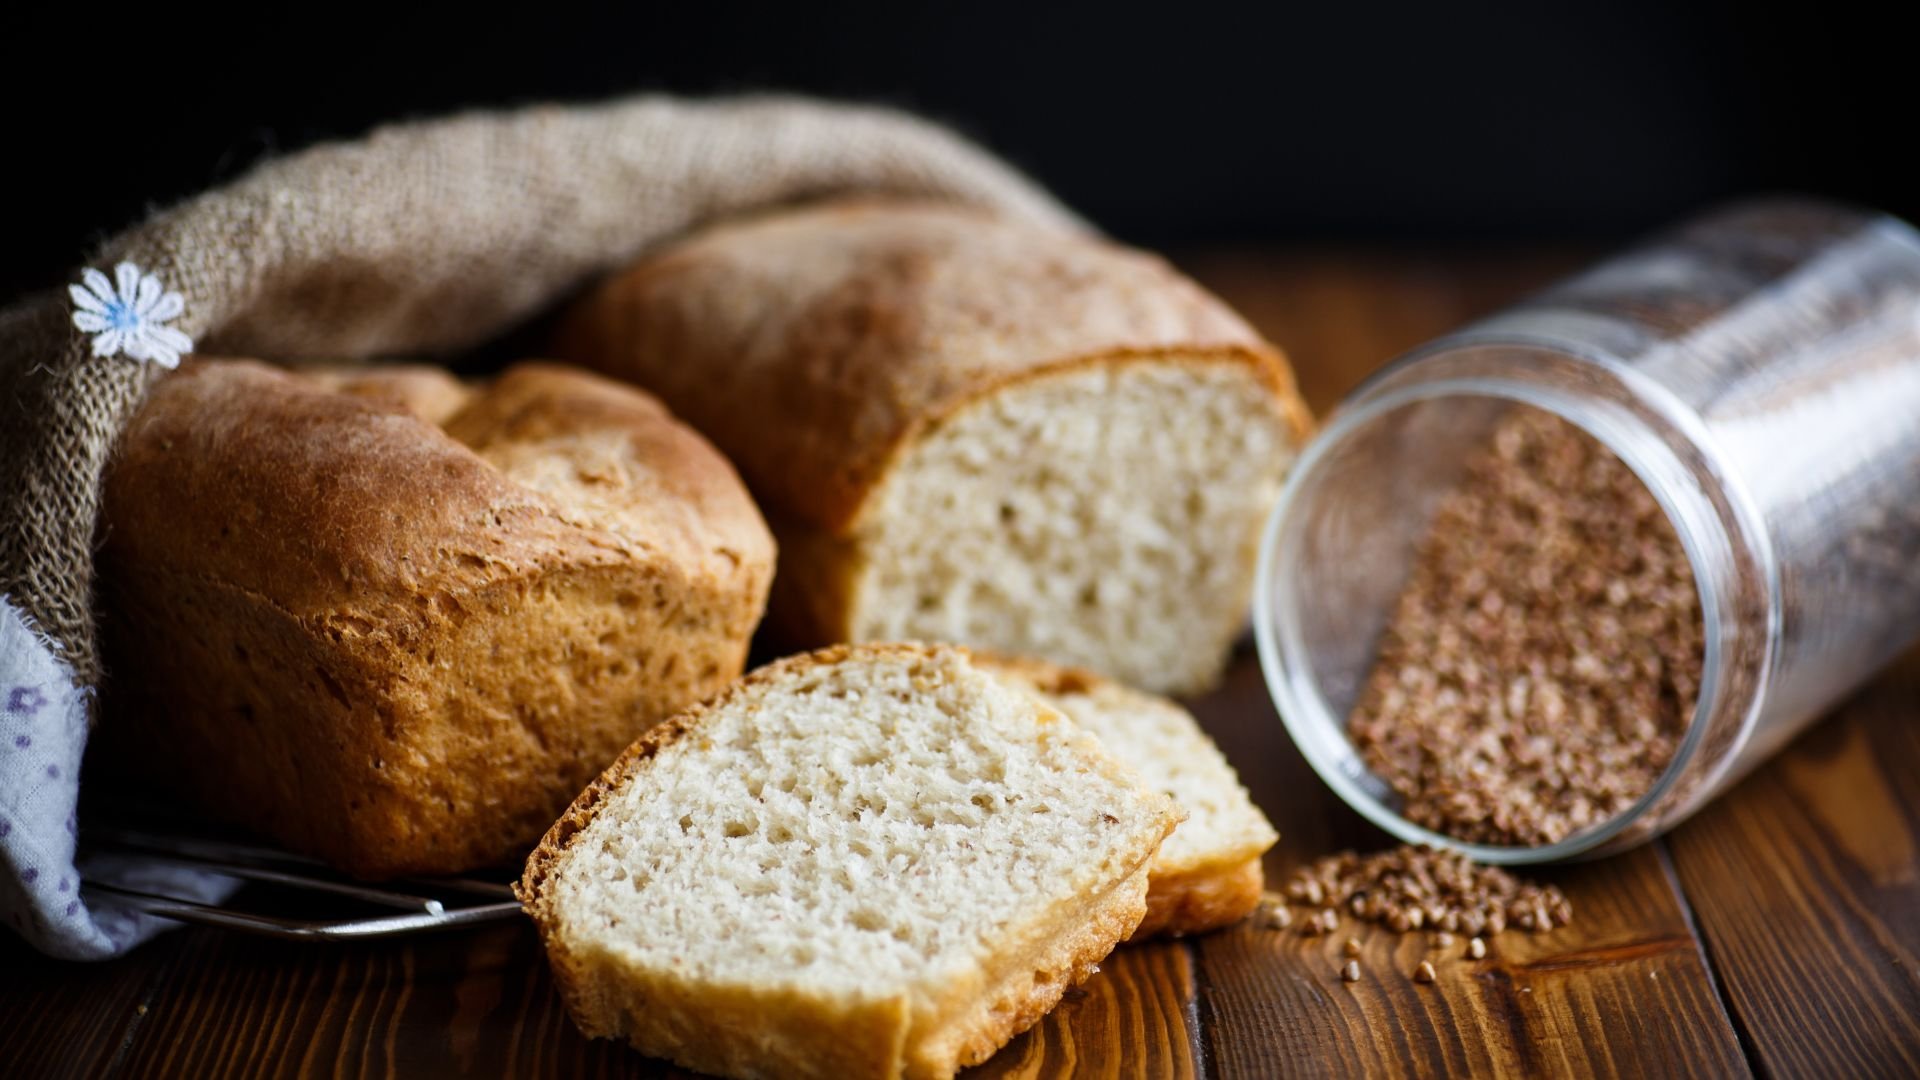 Bread made with buckwheat flour